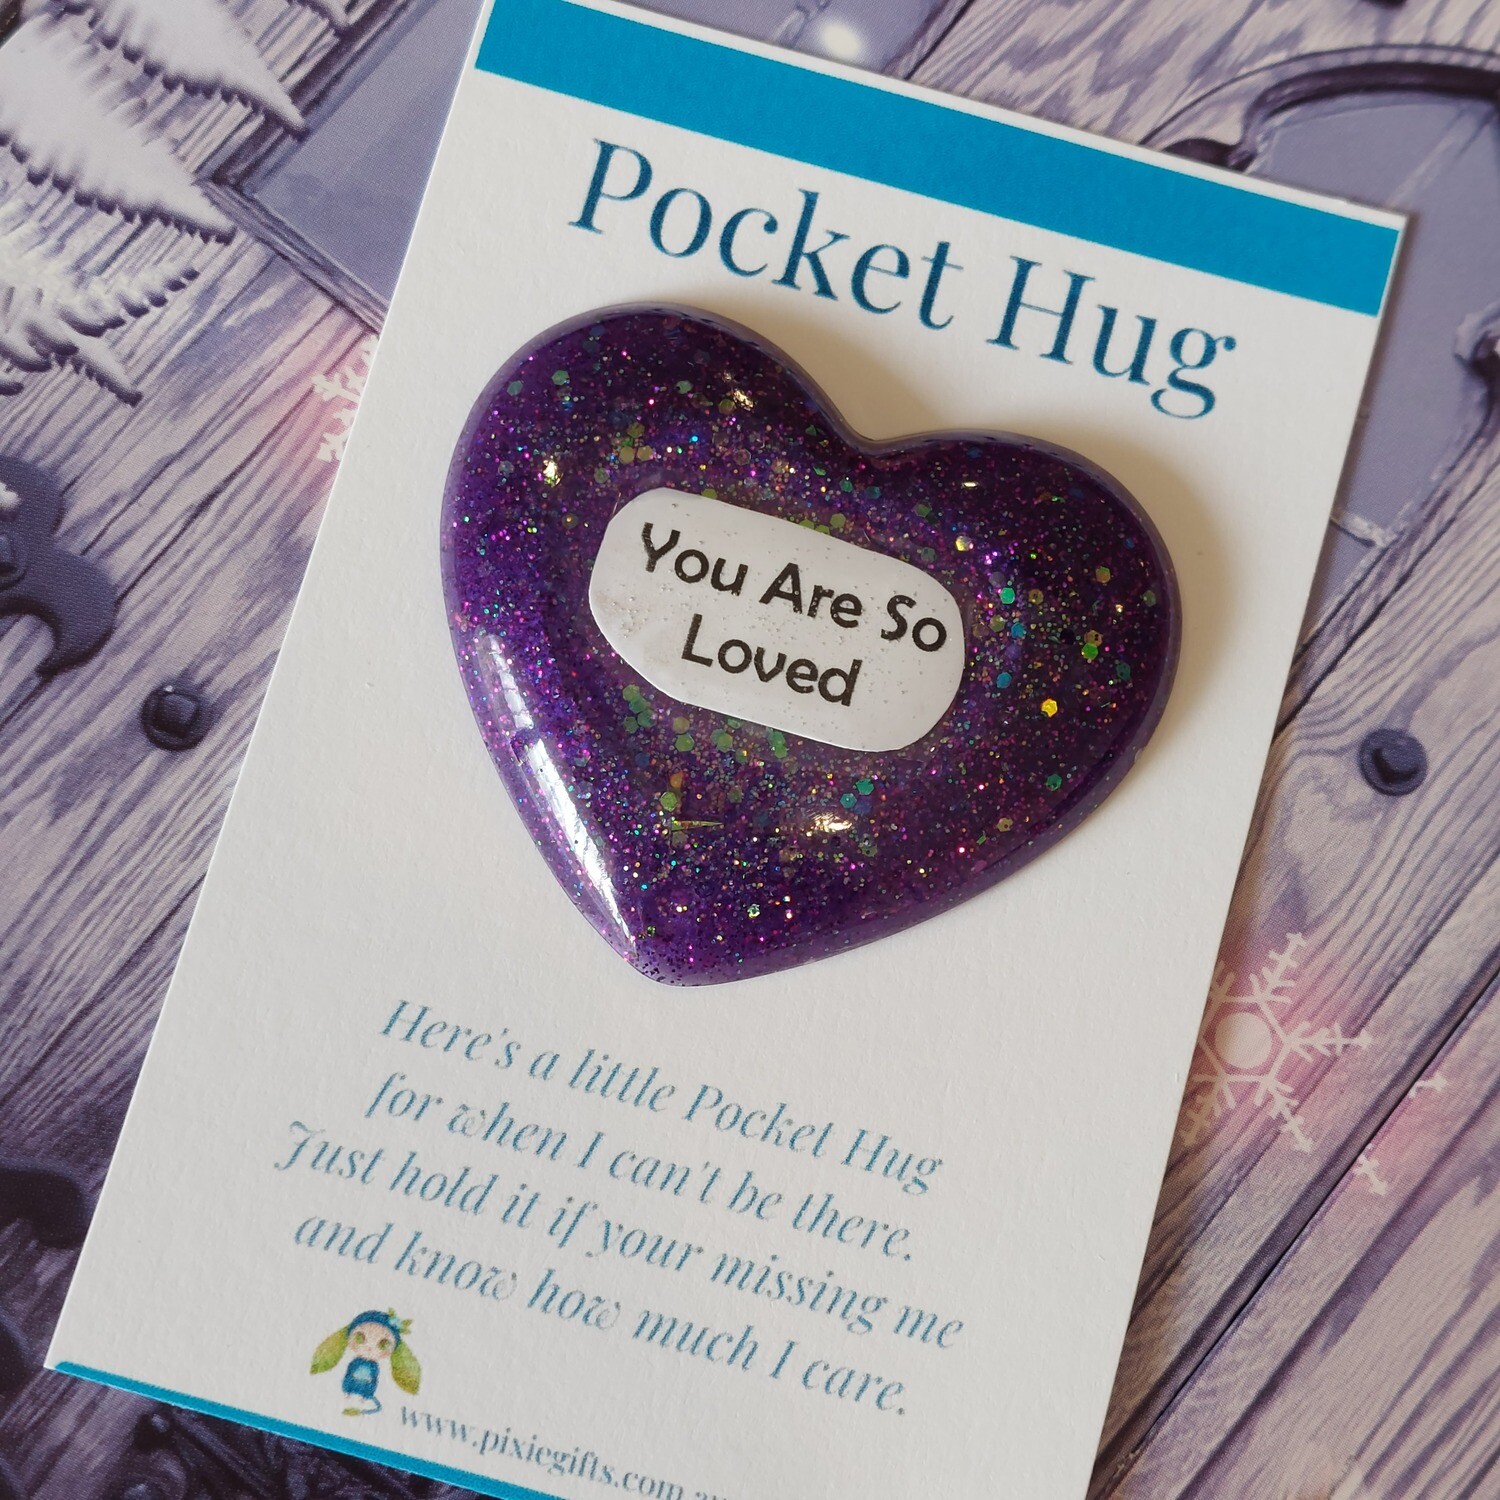 Pocket Hug - You are so Loved